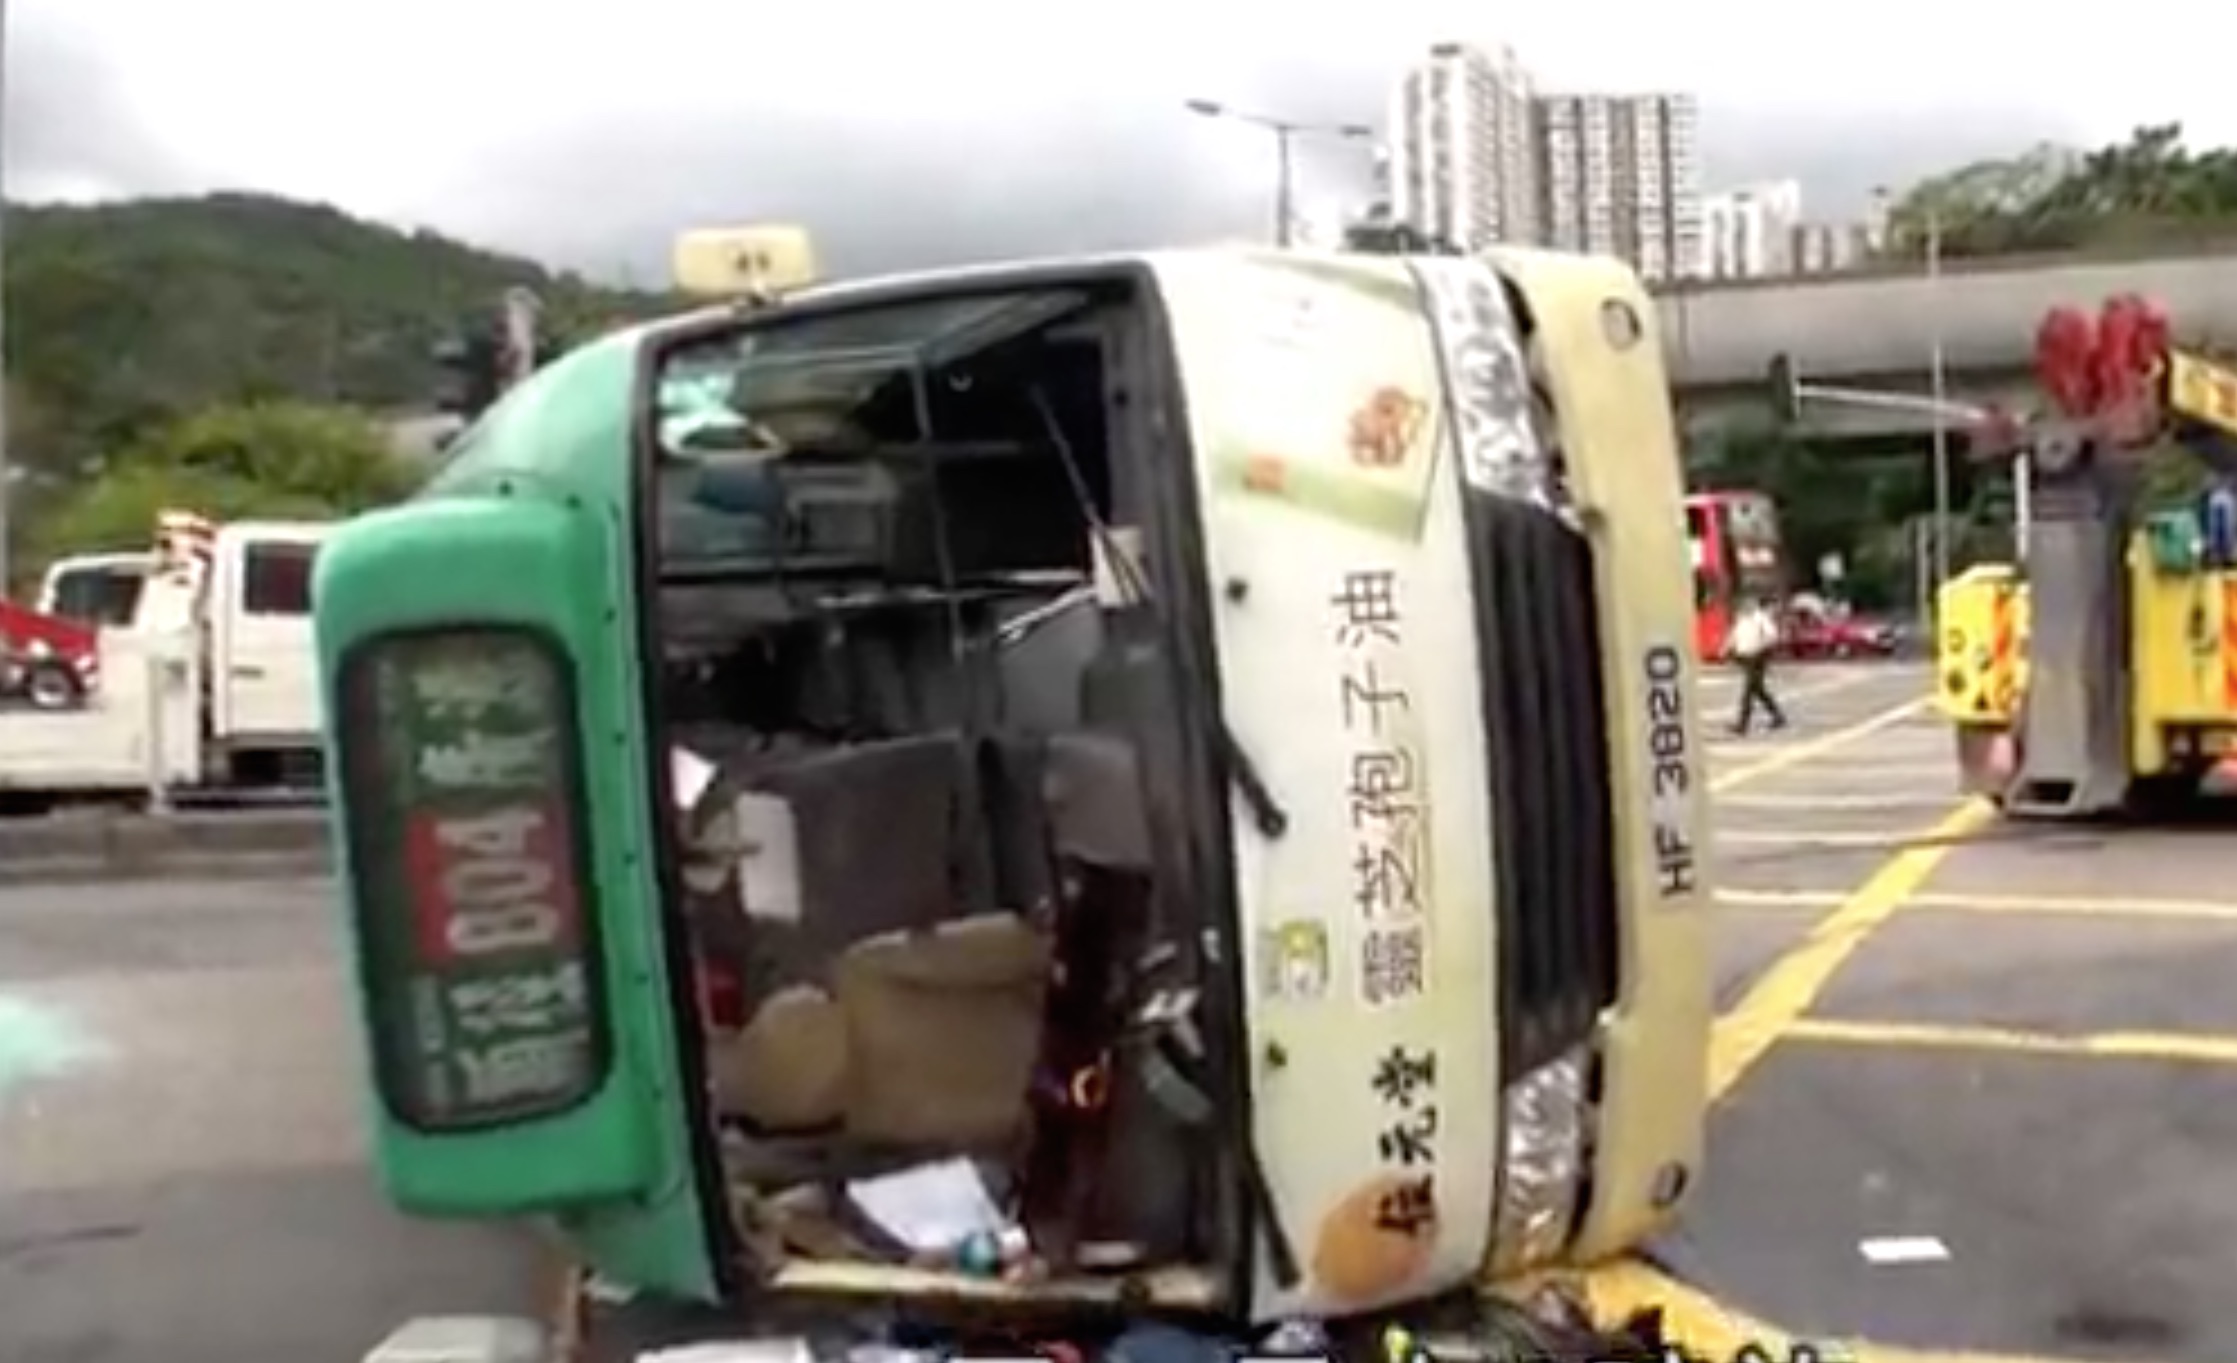 Bus smash in Sha Tin (via screen grab from Apple Daily)